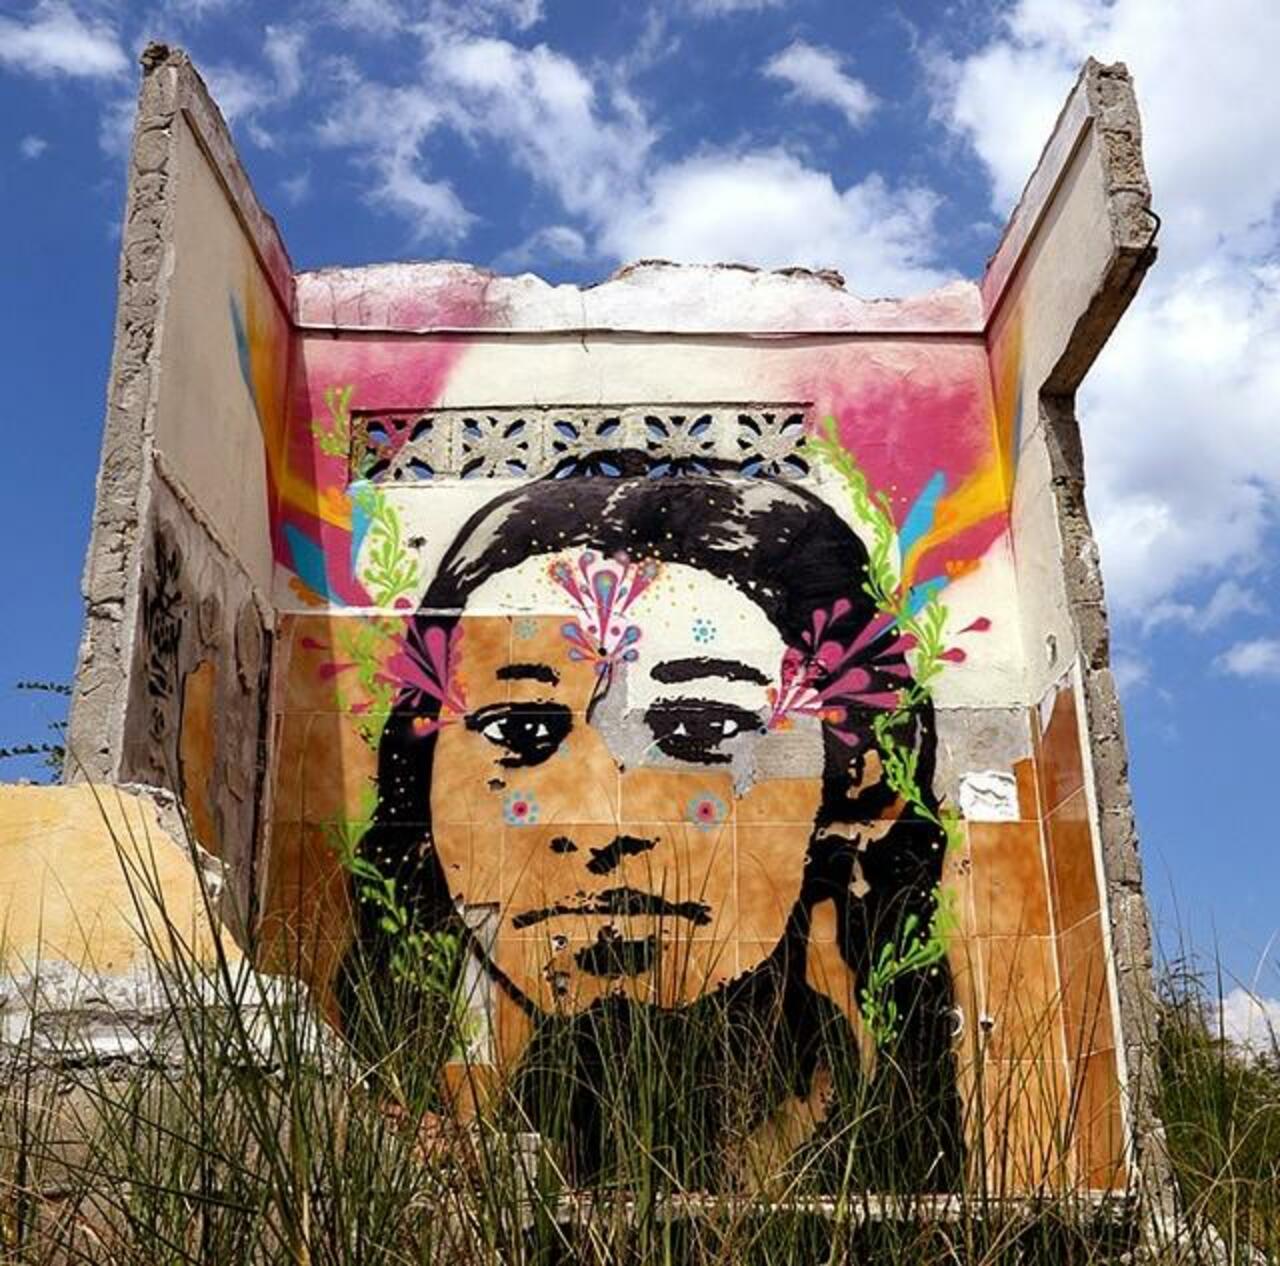 RT "@GoogleStreetArt: Just completed! 
New Street Art portrait by Stinkfish 

#art #mural #graffiti #streetart http://t.co/LXCh2q1sPj”